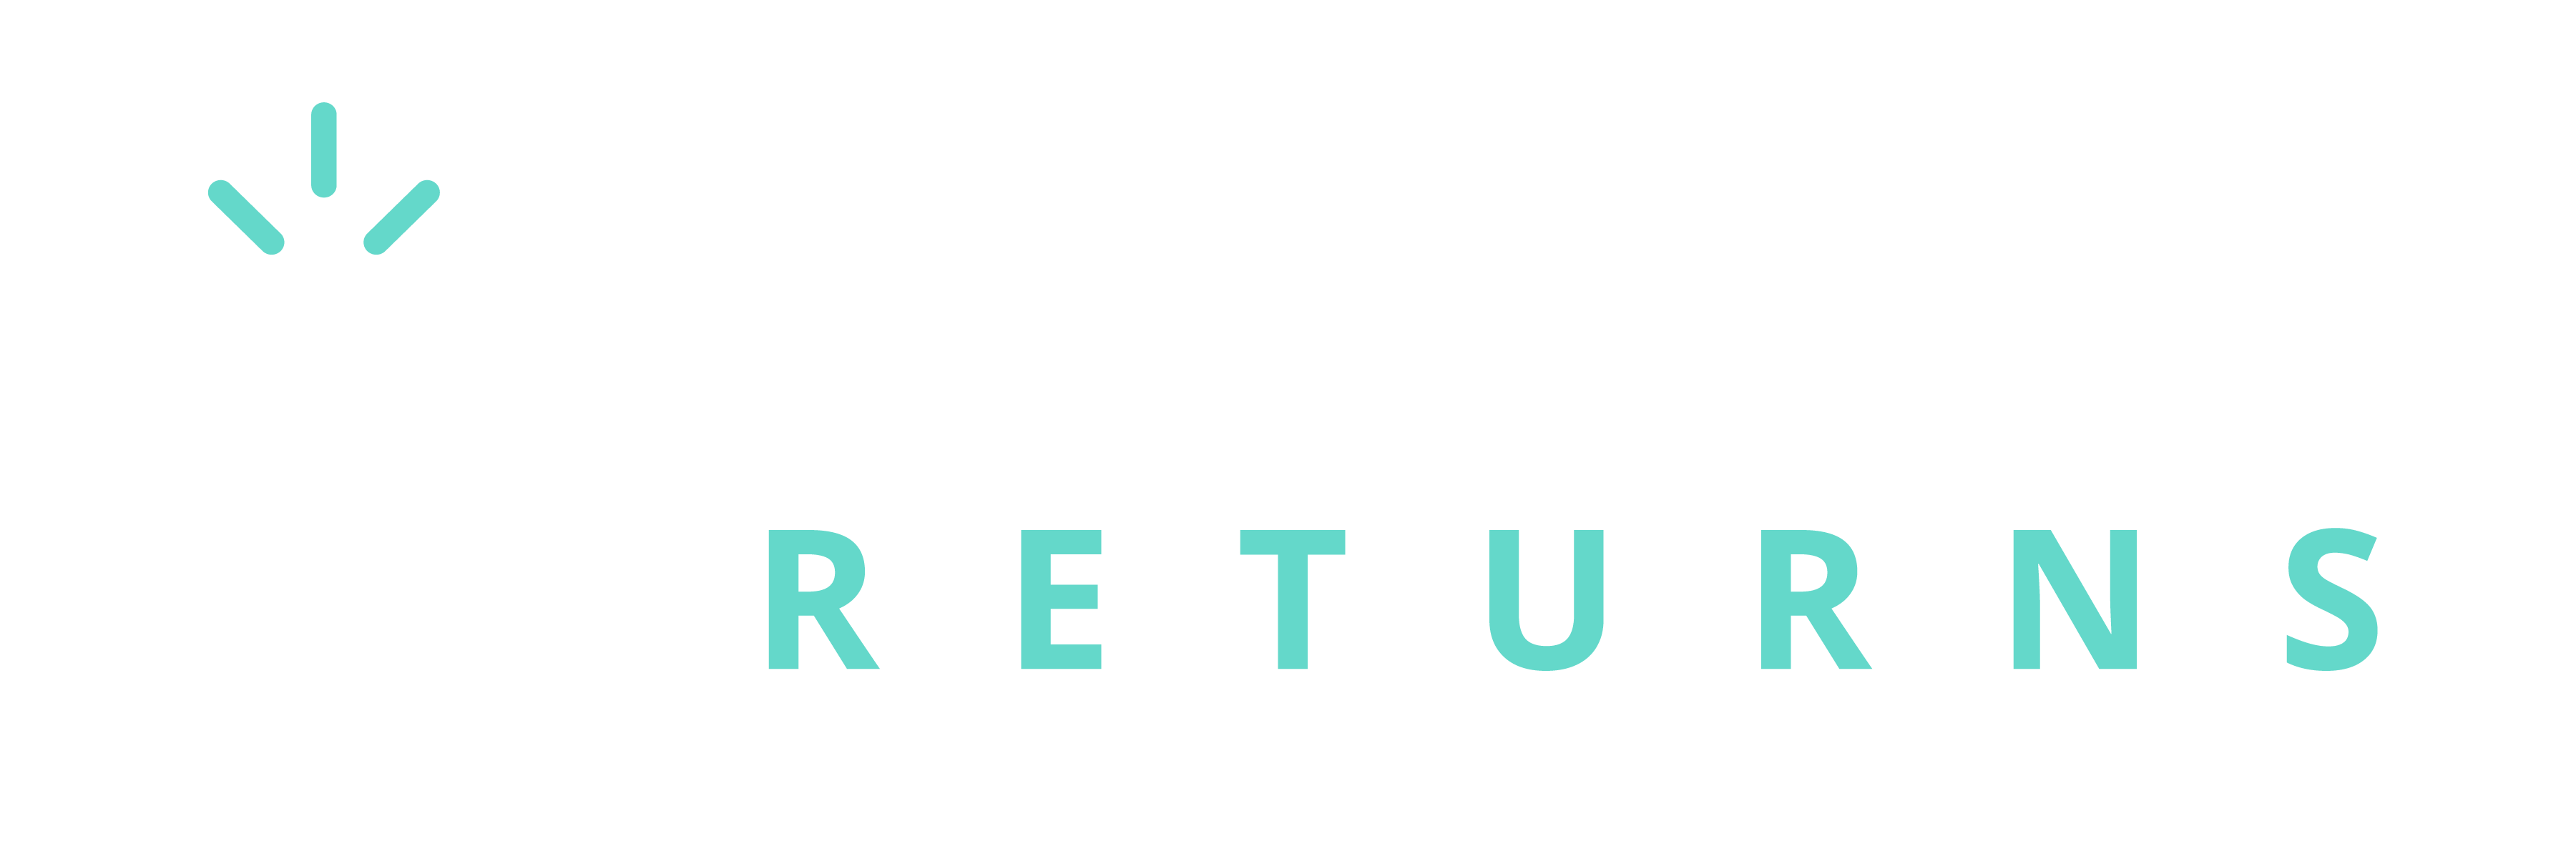 SnapBack Returns